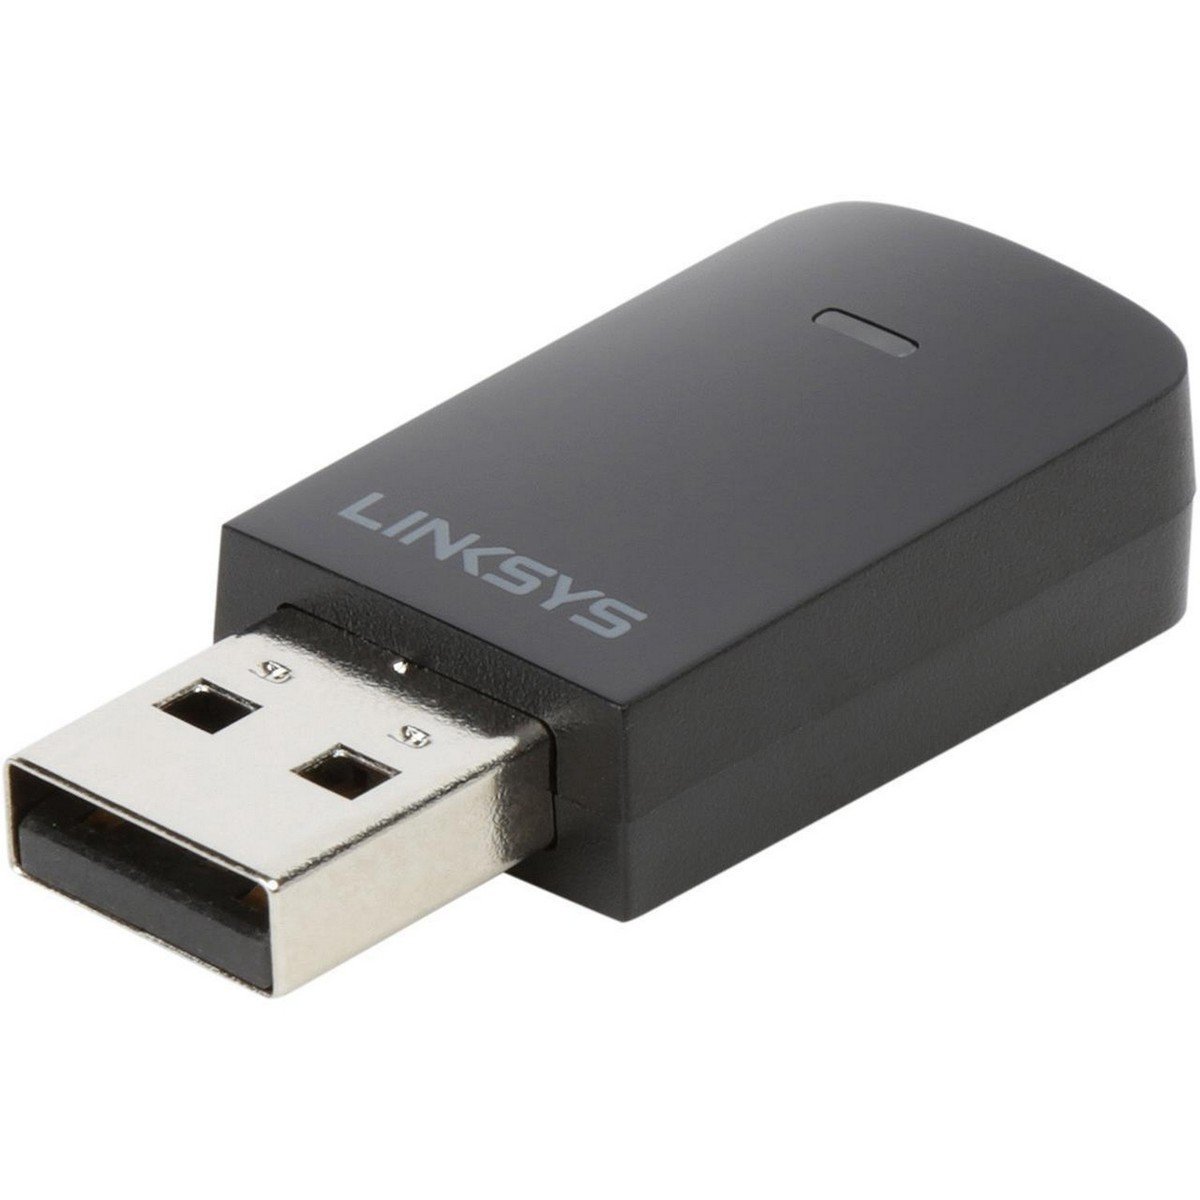 Linksys AC600 WiFi Micro USB Adapter - Store 974 | ستور ٩٧٤